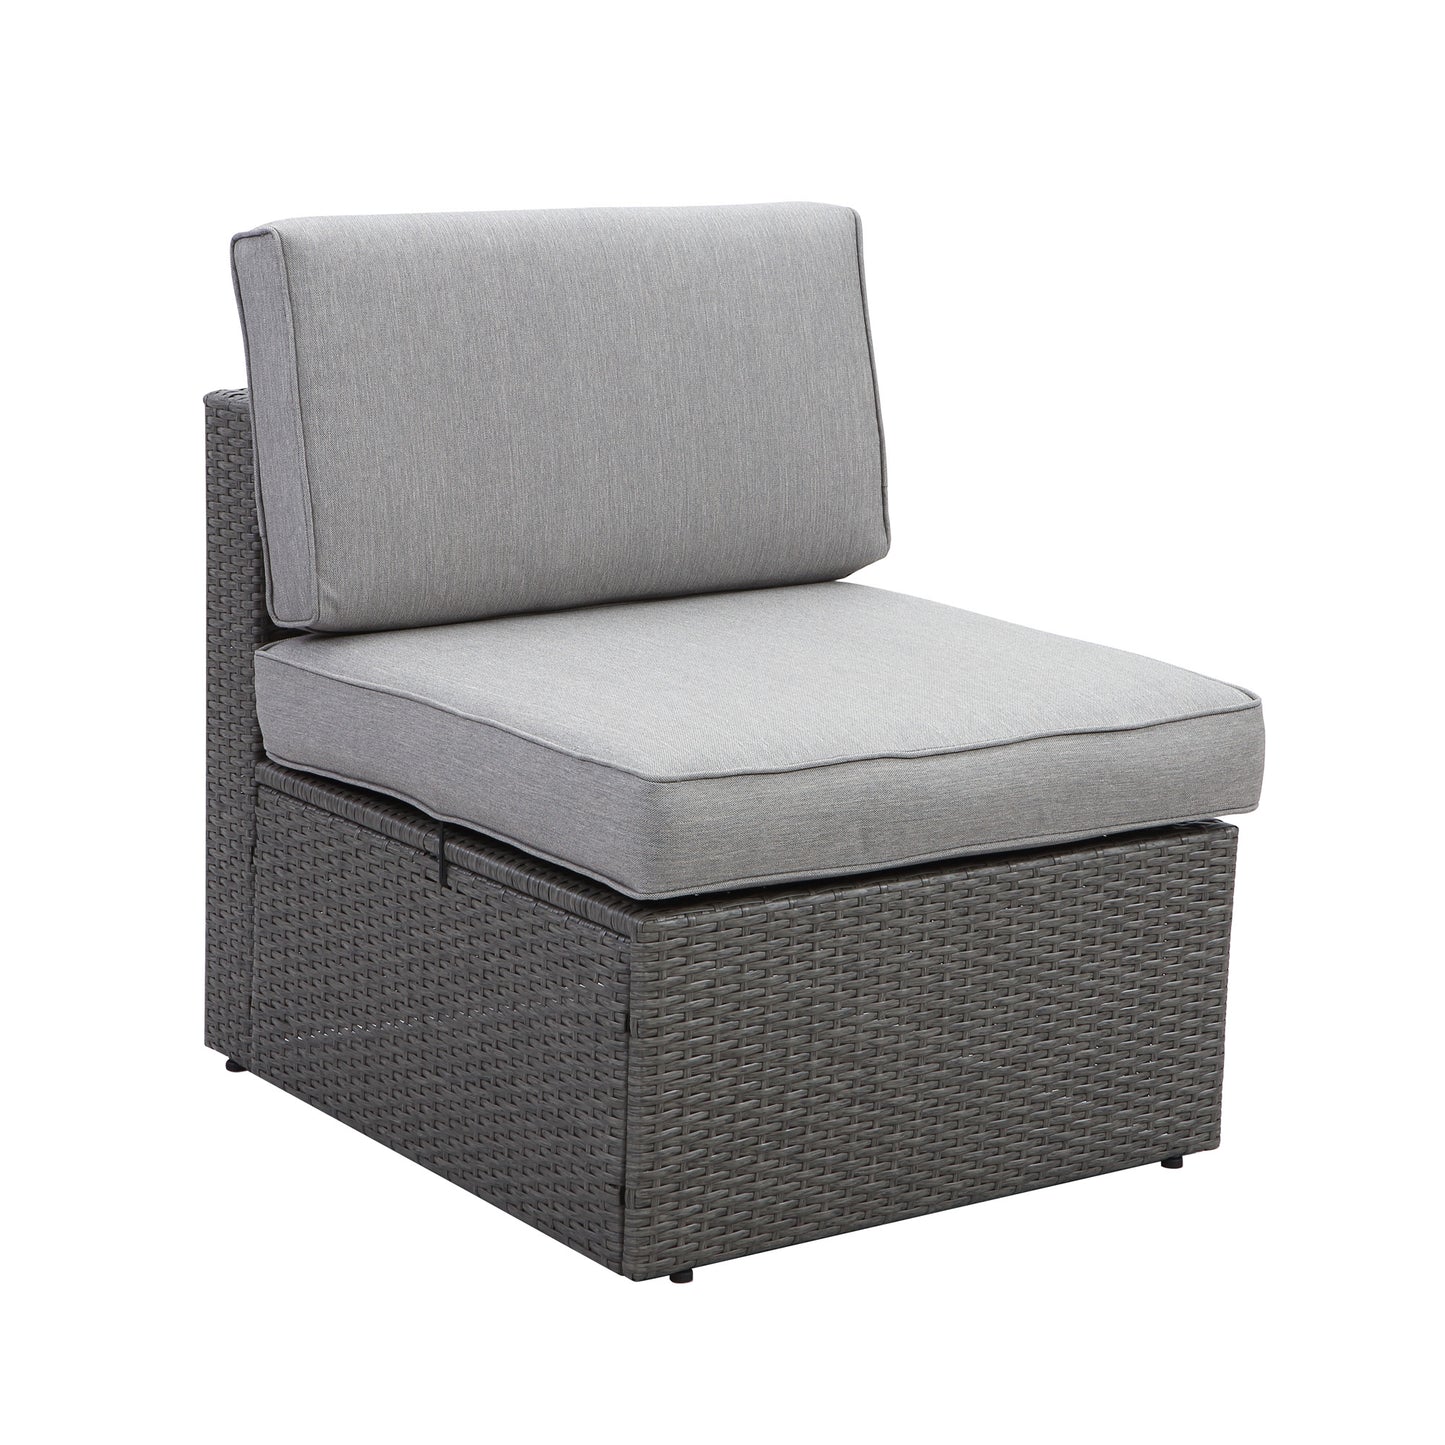 Sydney PE Sectional Single Armless Chair – Black/Gray